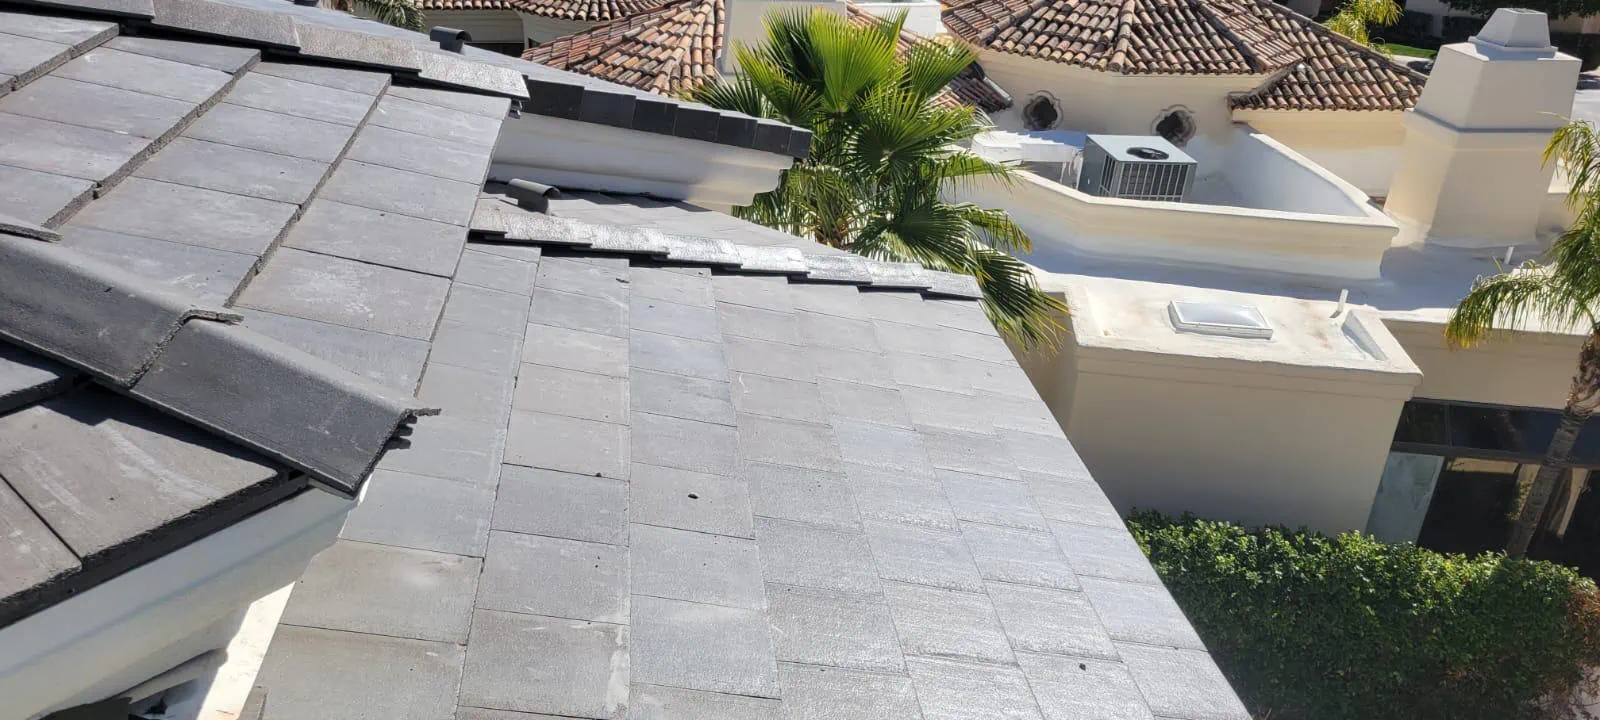 installation of concrete roof durable in phoenix az